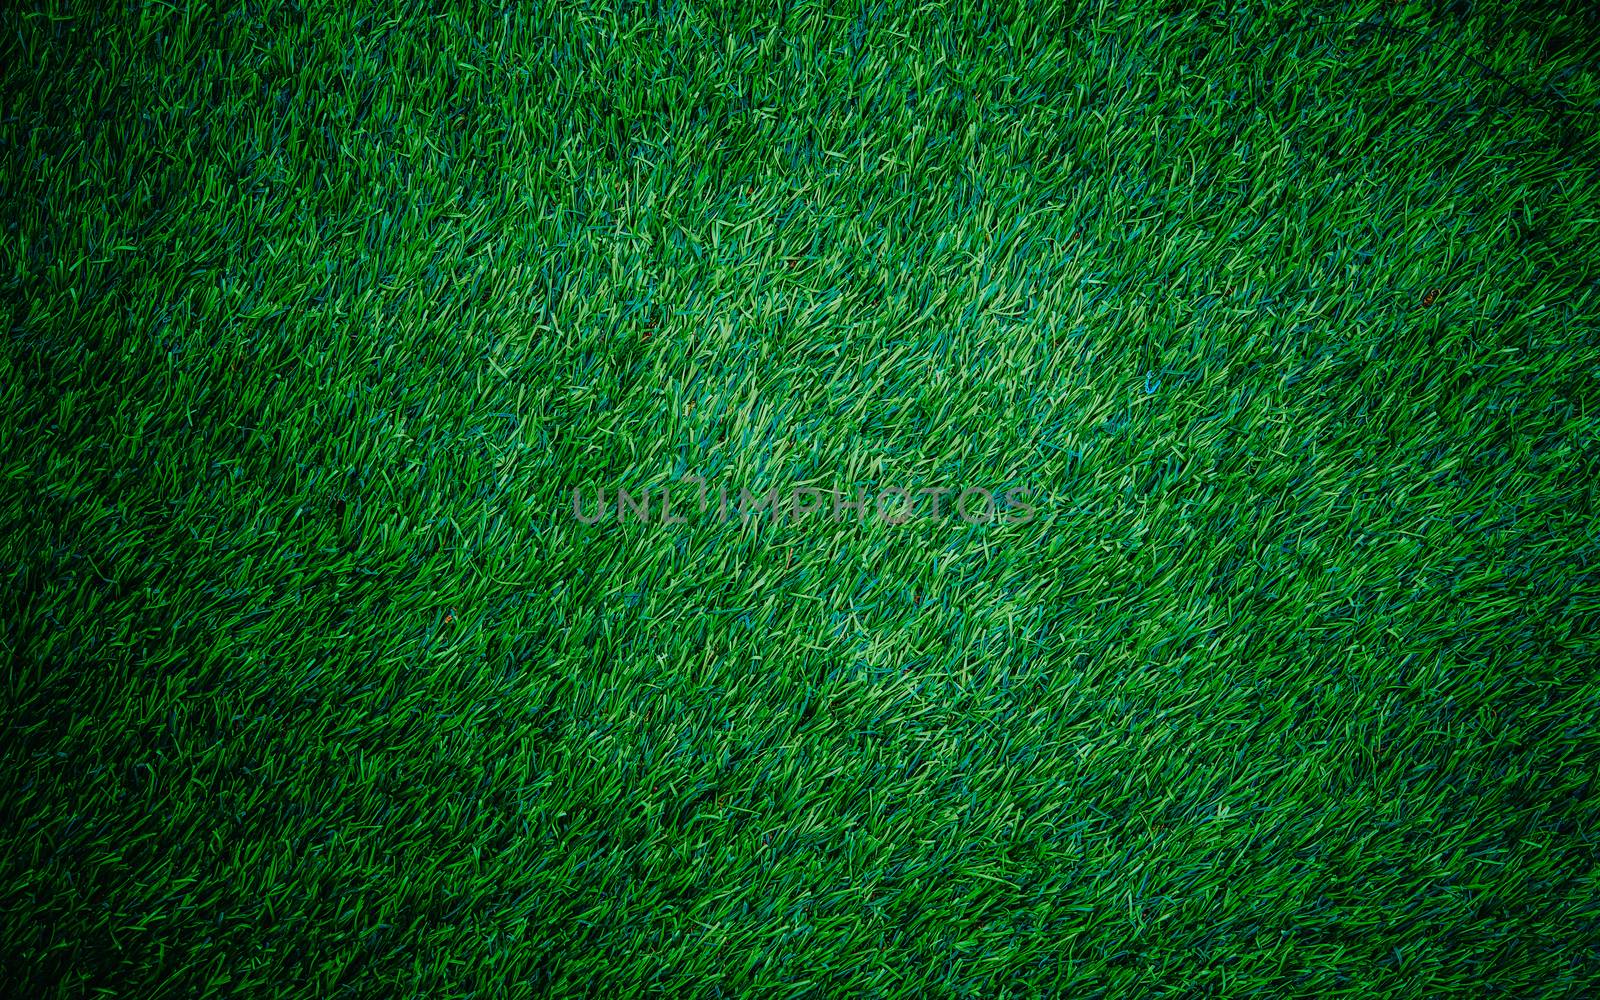 Green grass natural background texture.fresh green grass.beautif by toodlingstudio